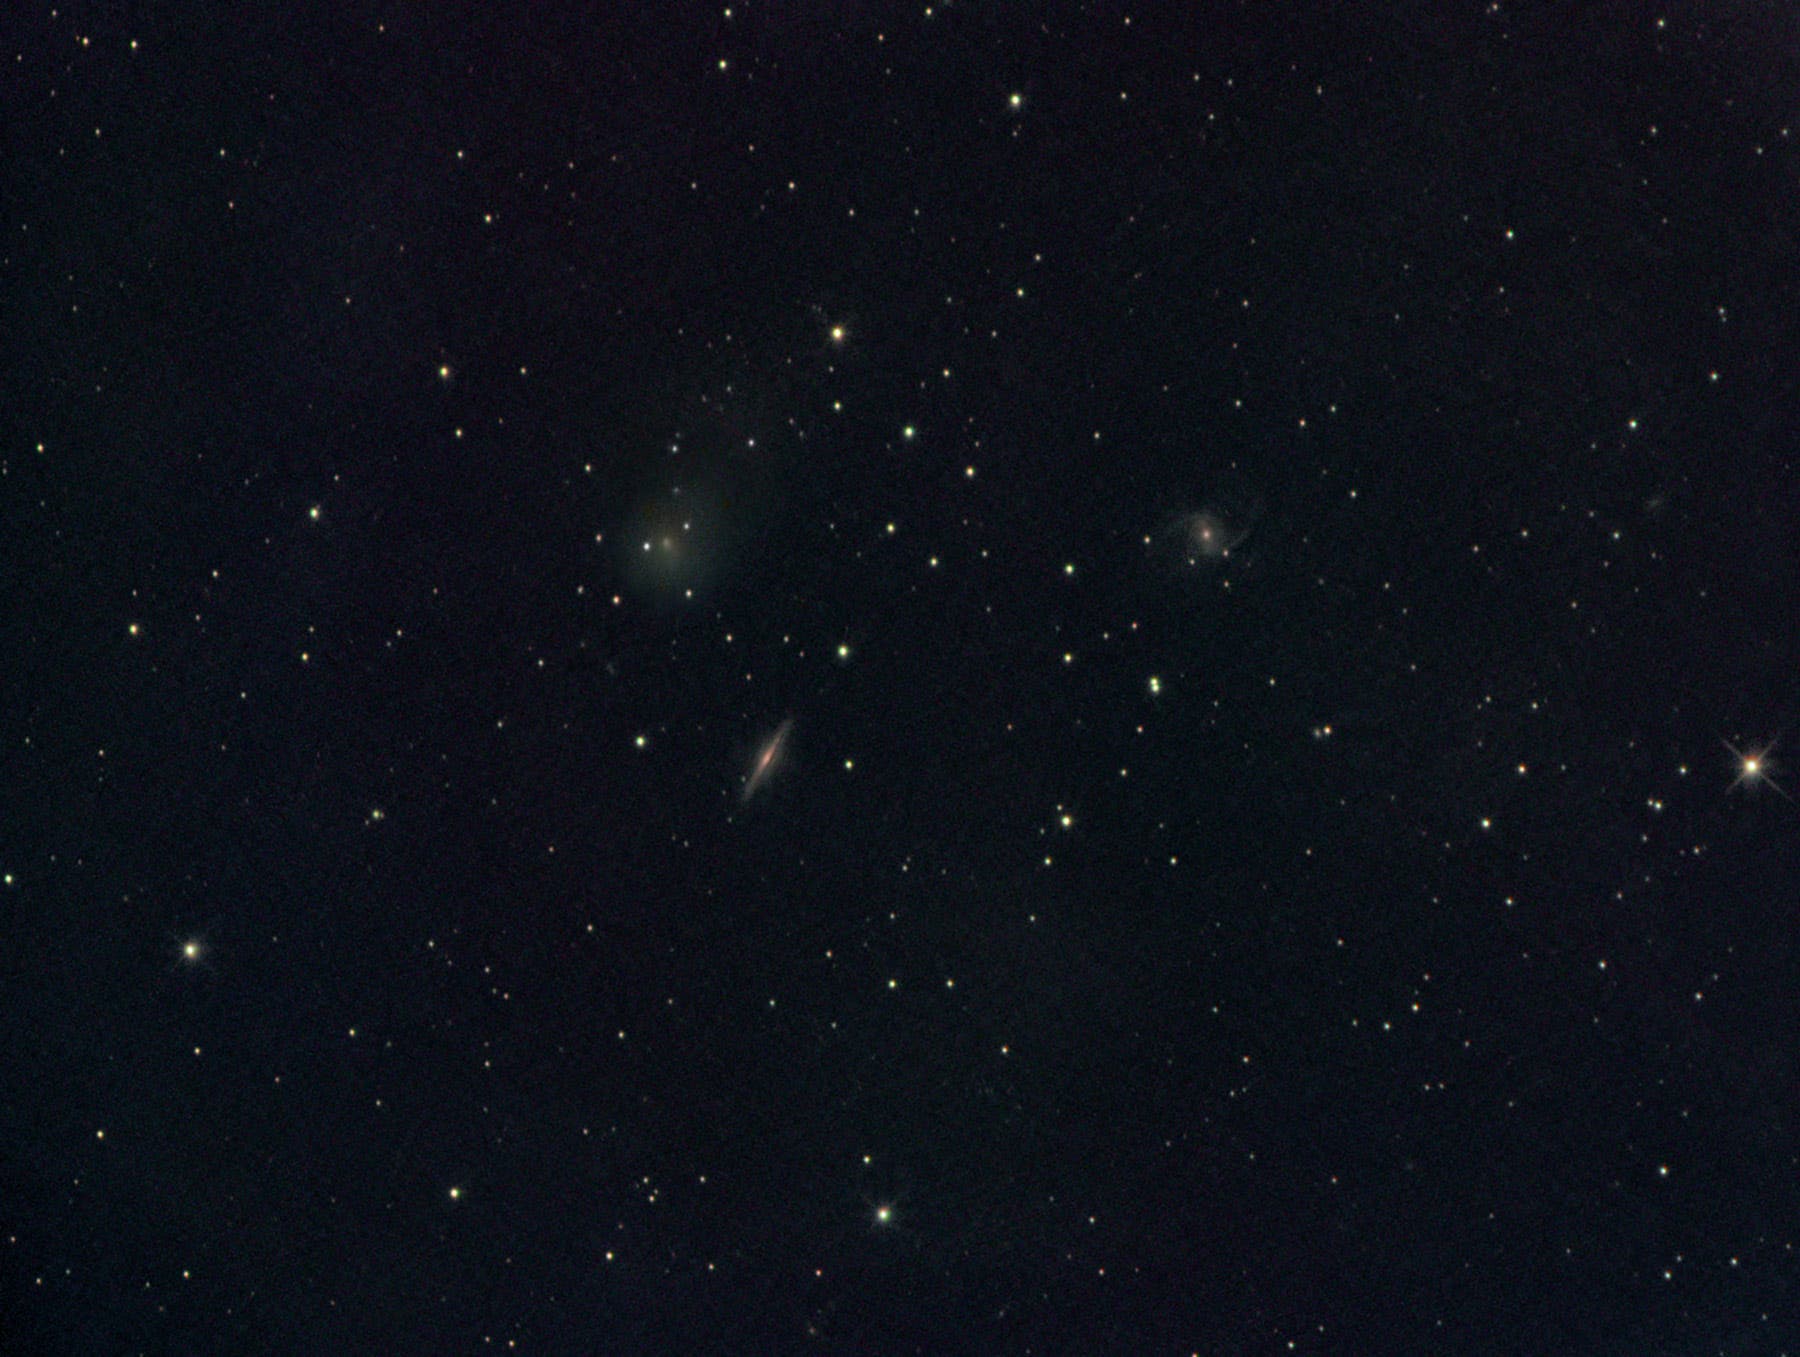 Lovejoy C/2014 Q2 bei NGC 5905 und NGC 5908